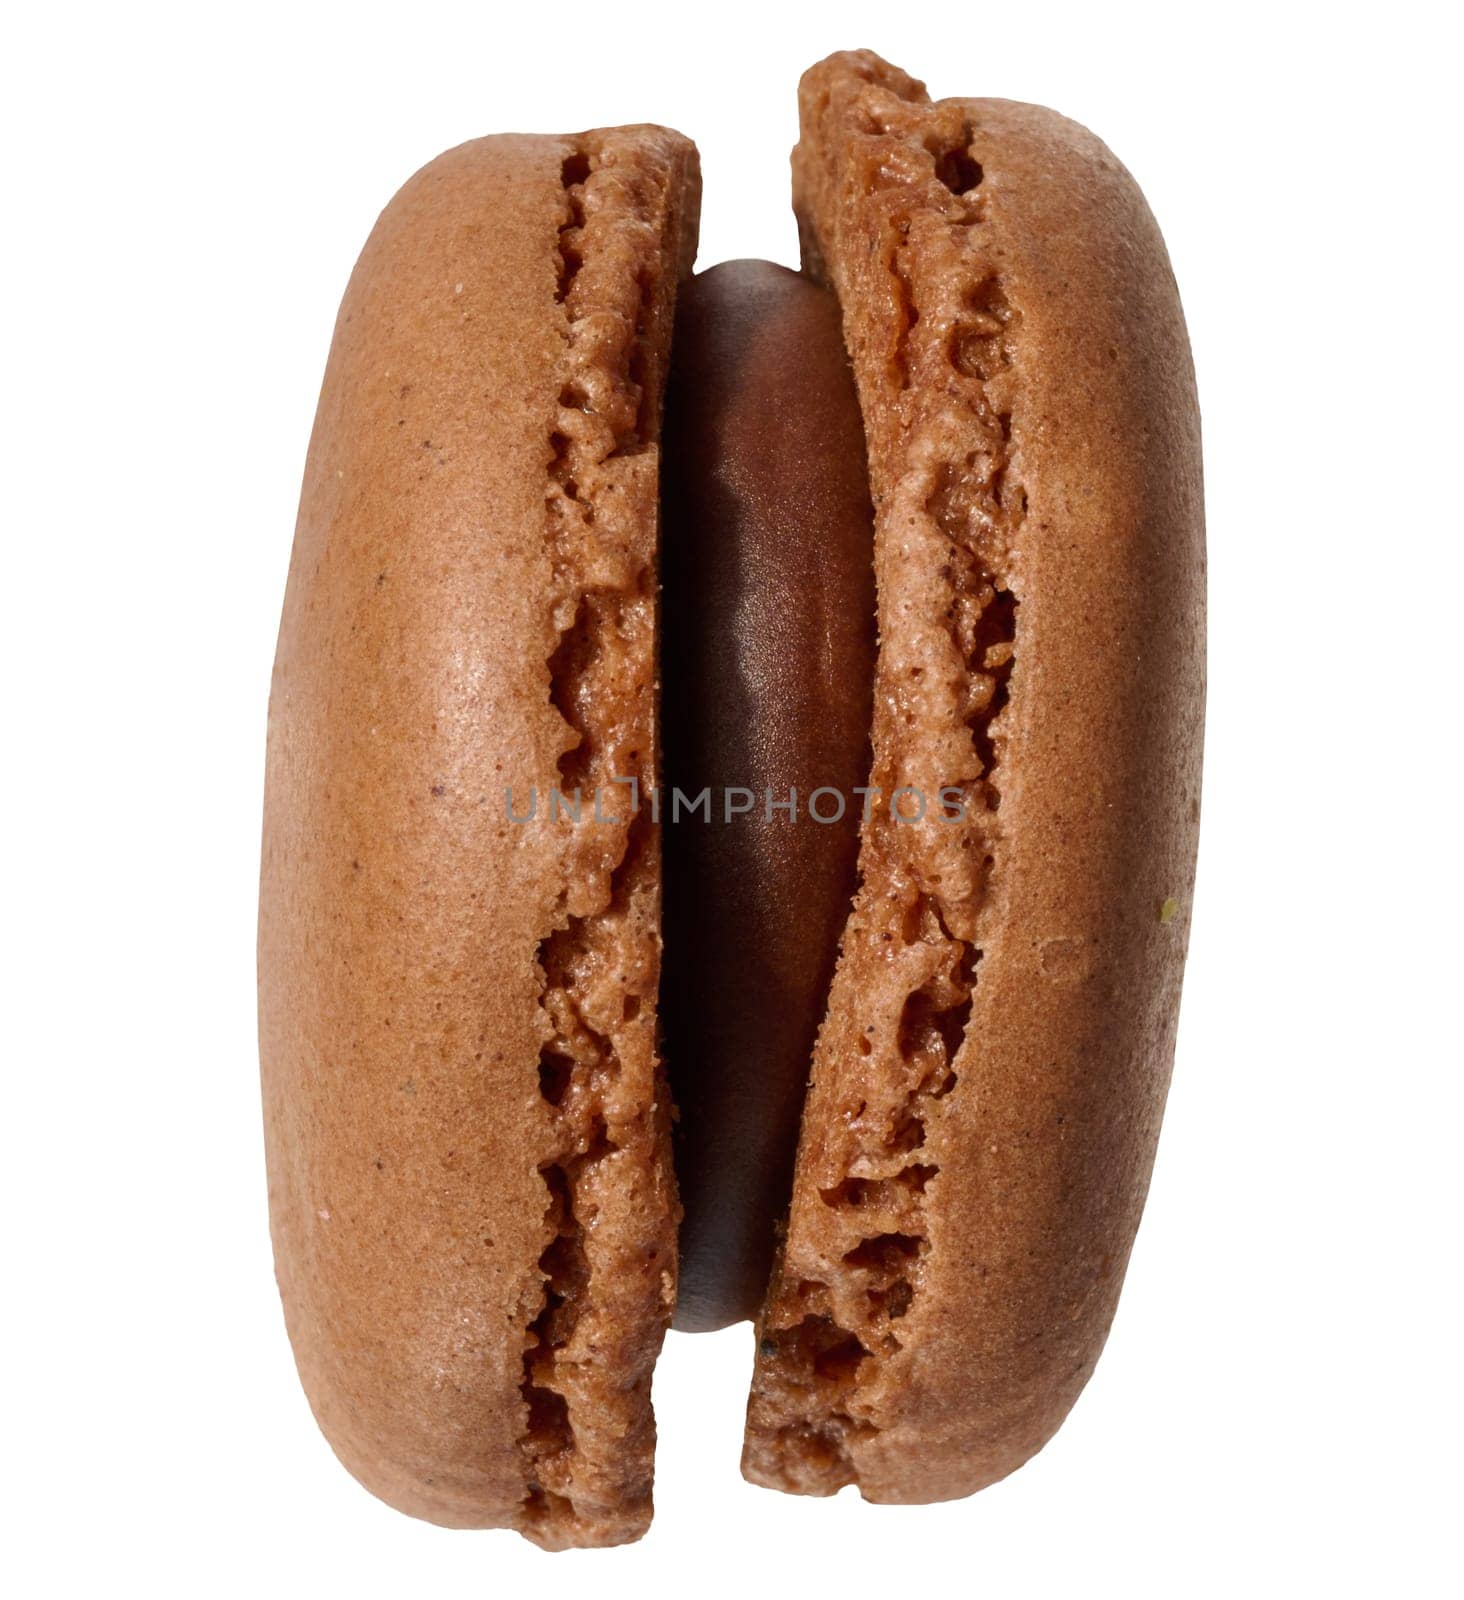 Chocolate macaron on isolated background, close up